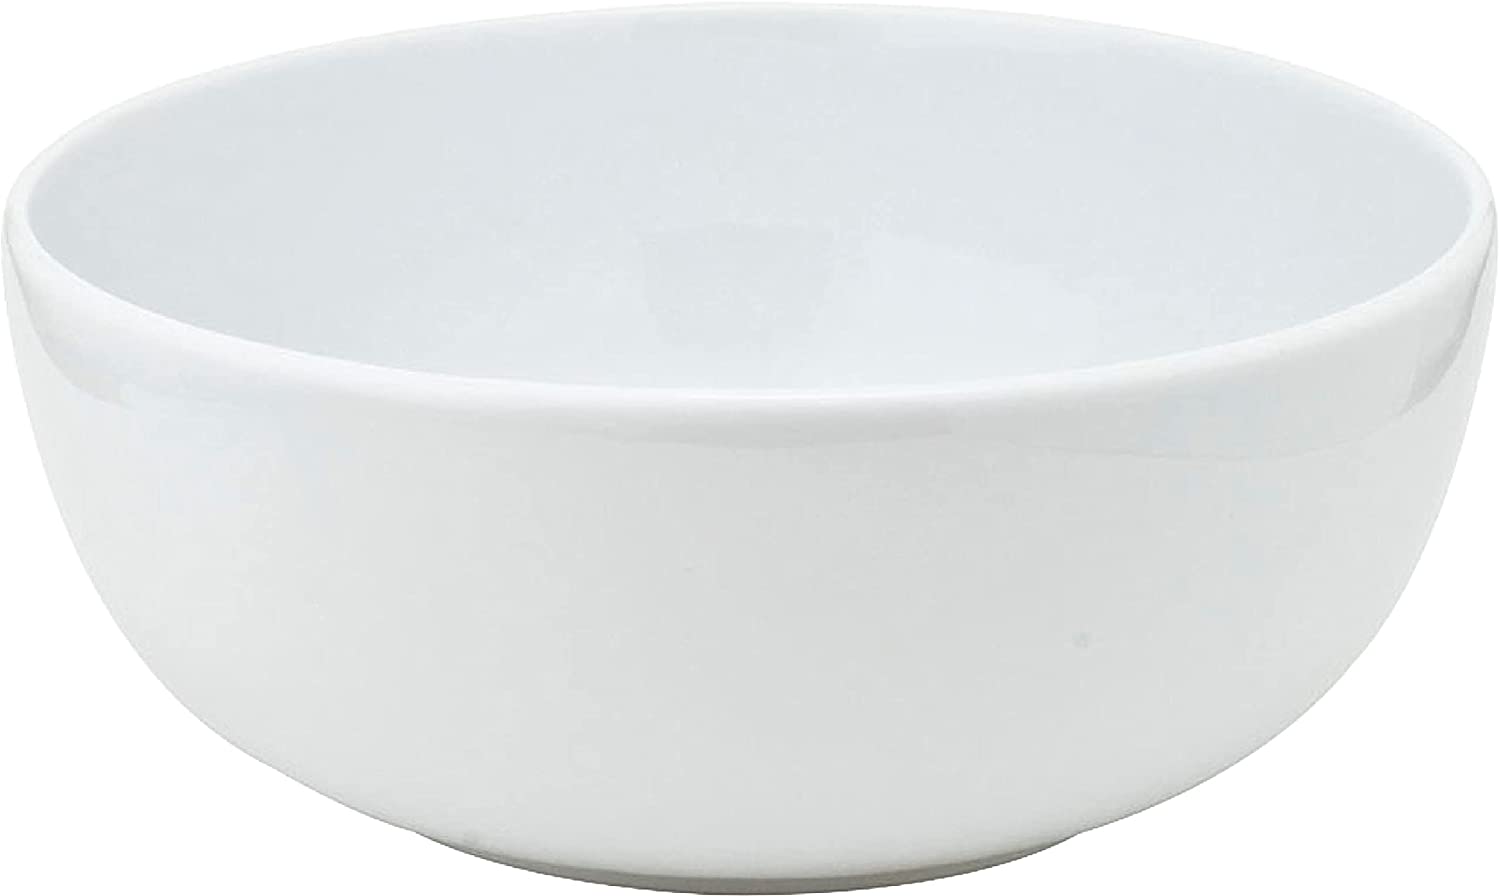 KAHLA Pronto / Aronda Bowl 8-1/4 Inches, White Color, 1 Piece